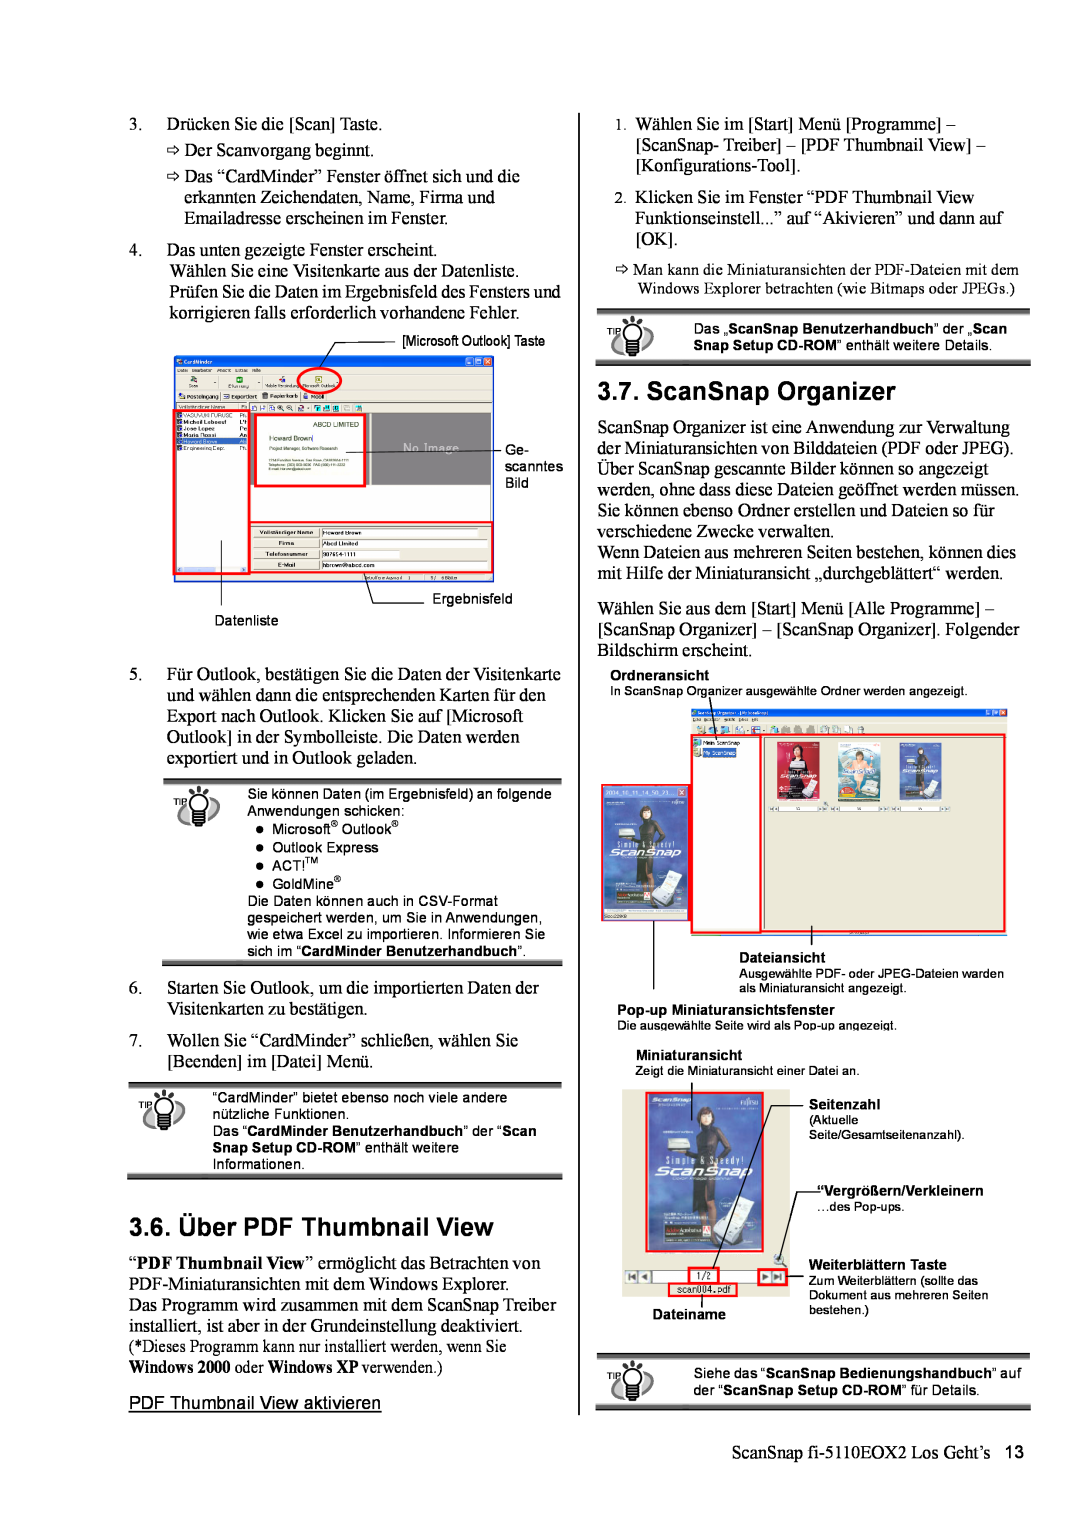 Fujitsu fi-5110EOX2 manual 3.6. Über PDF Thumbnail View, PDF Thumbnail View aktivieren, ScanSnap Organizer 